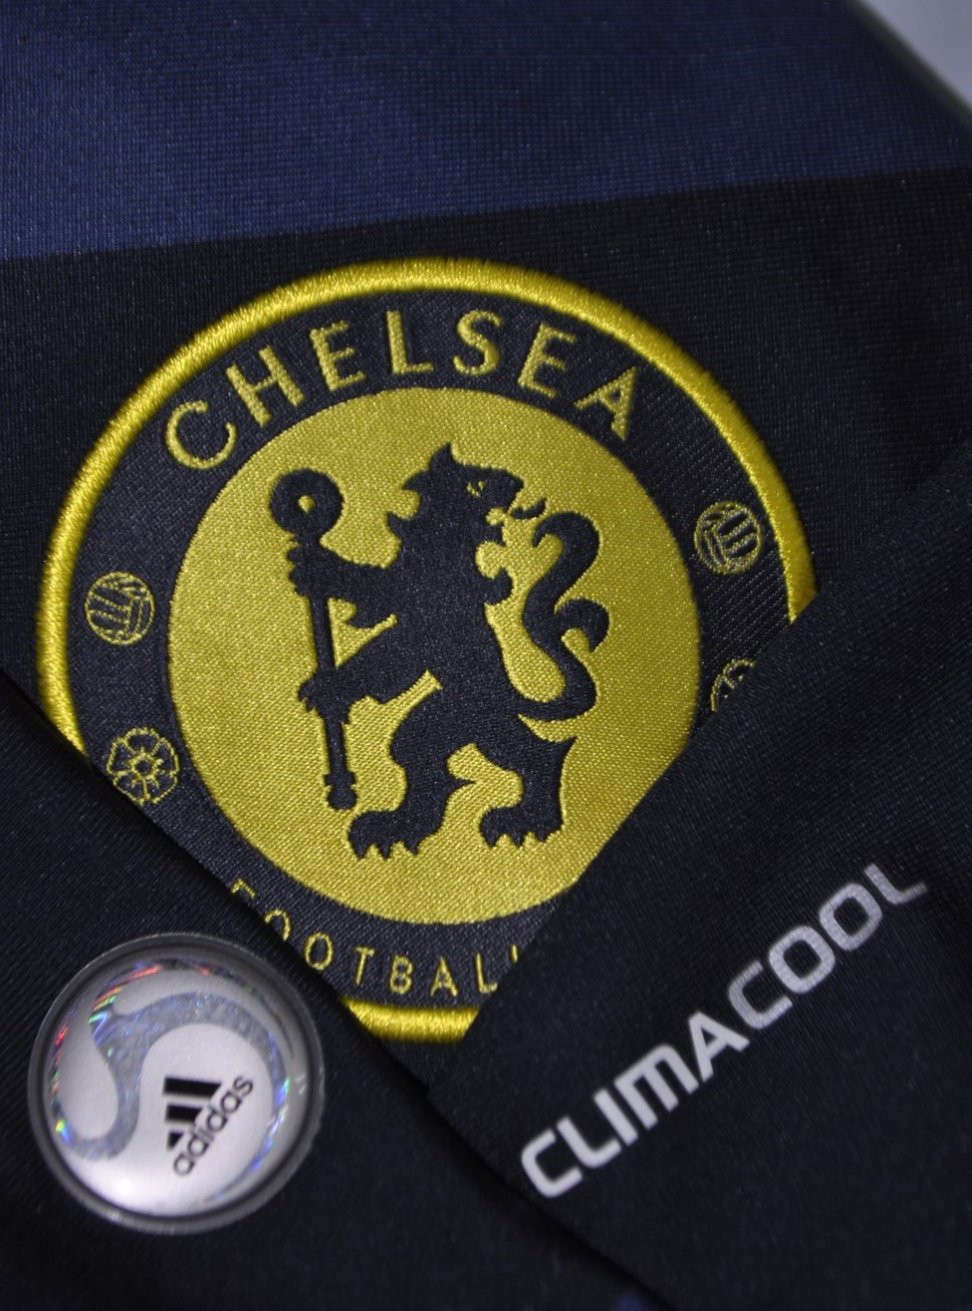 Chelsea Away football shirt 2009 - 2010. Sponsored by Samsung